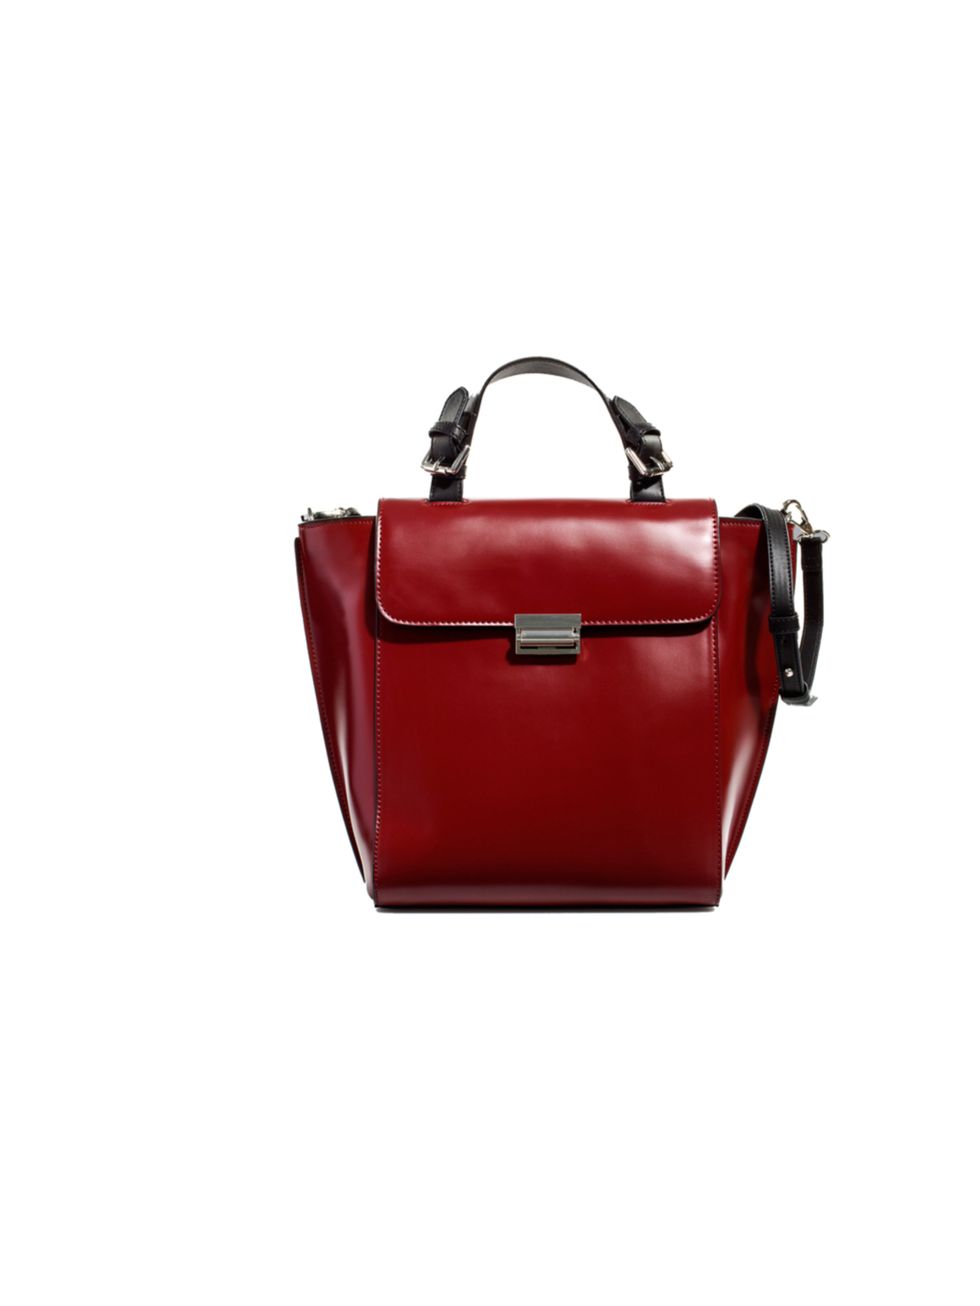 <p>THE CITY BAG</p><p><a href="http://www.zara.com/webapp/wcs/stores/servlet/product/uk/en/zara-neu-W2012/269200/909655/BAG%20WITH%20METALLIC%20CLASP">Zara</a> burgundy leather handbag, £29.99</p>